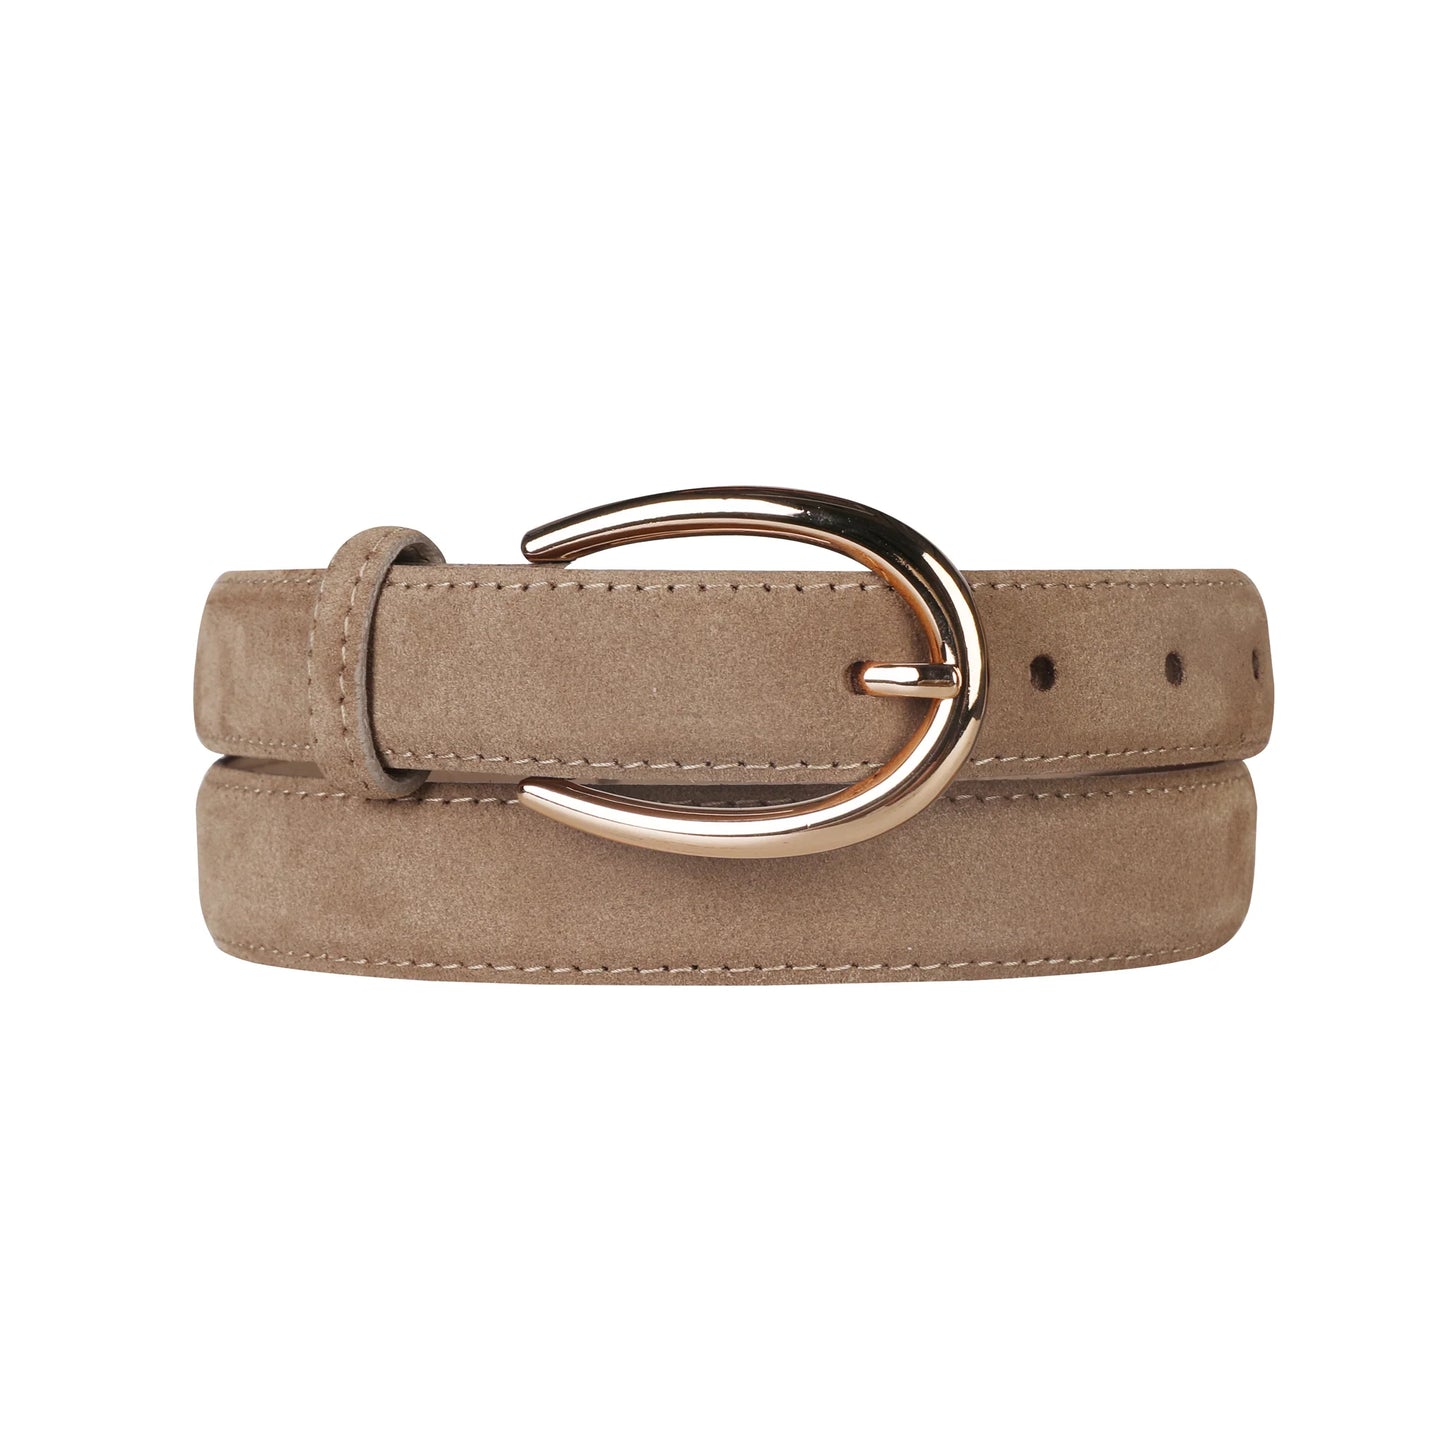 Novinska Novinska Horseshoe Belt, suede leather belt, belt, women's clothing, accessories